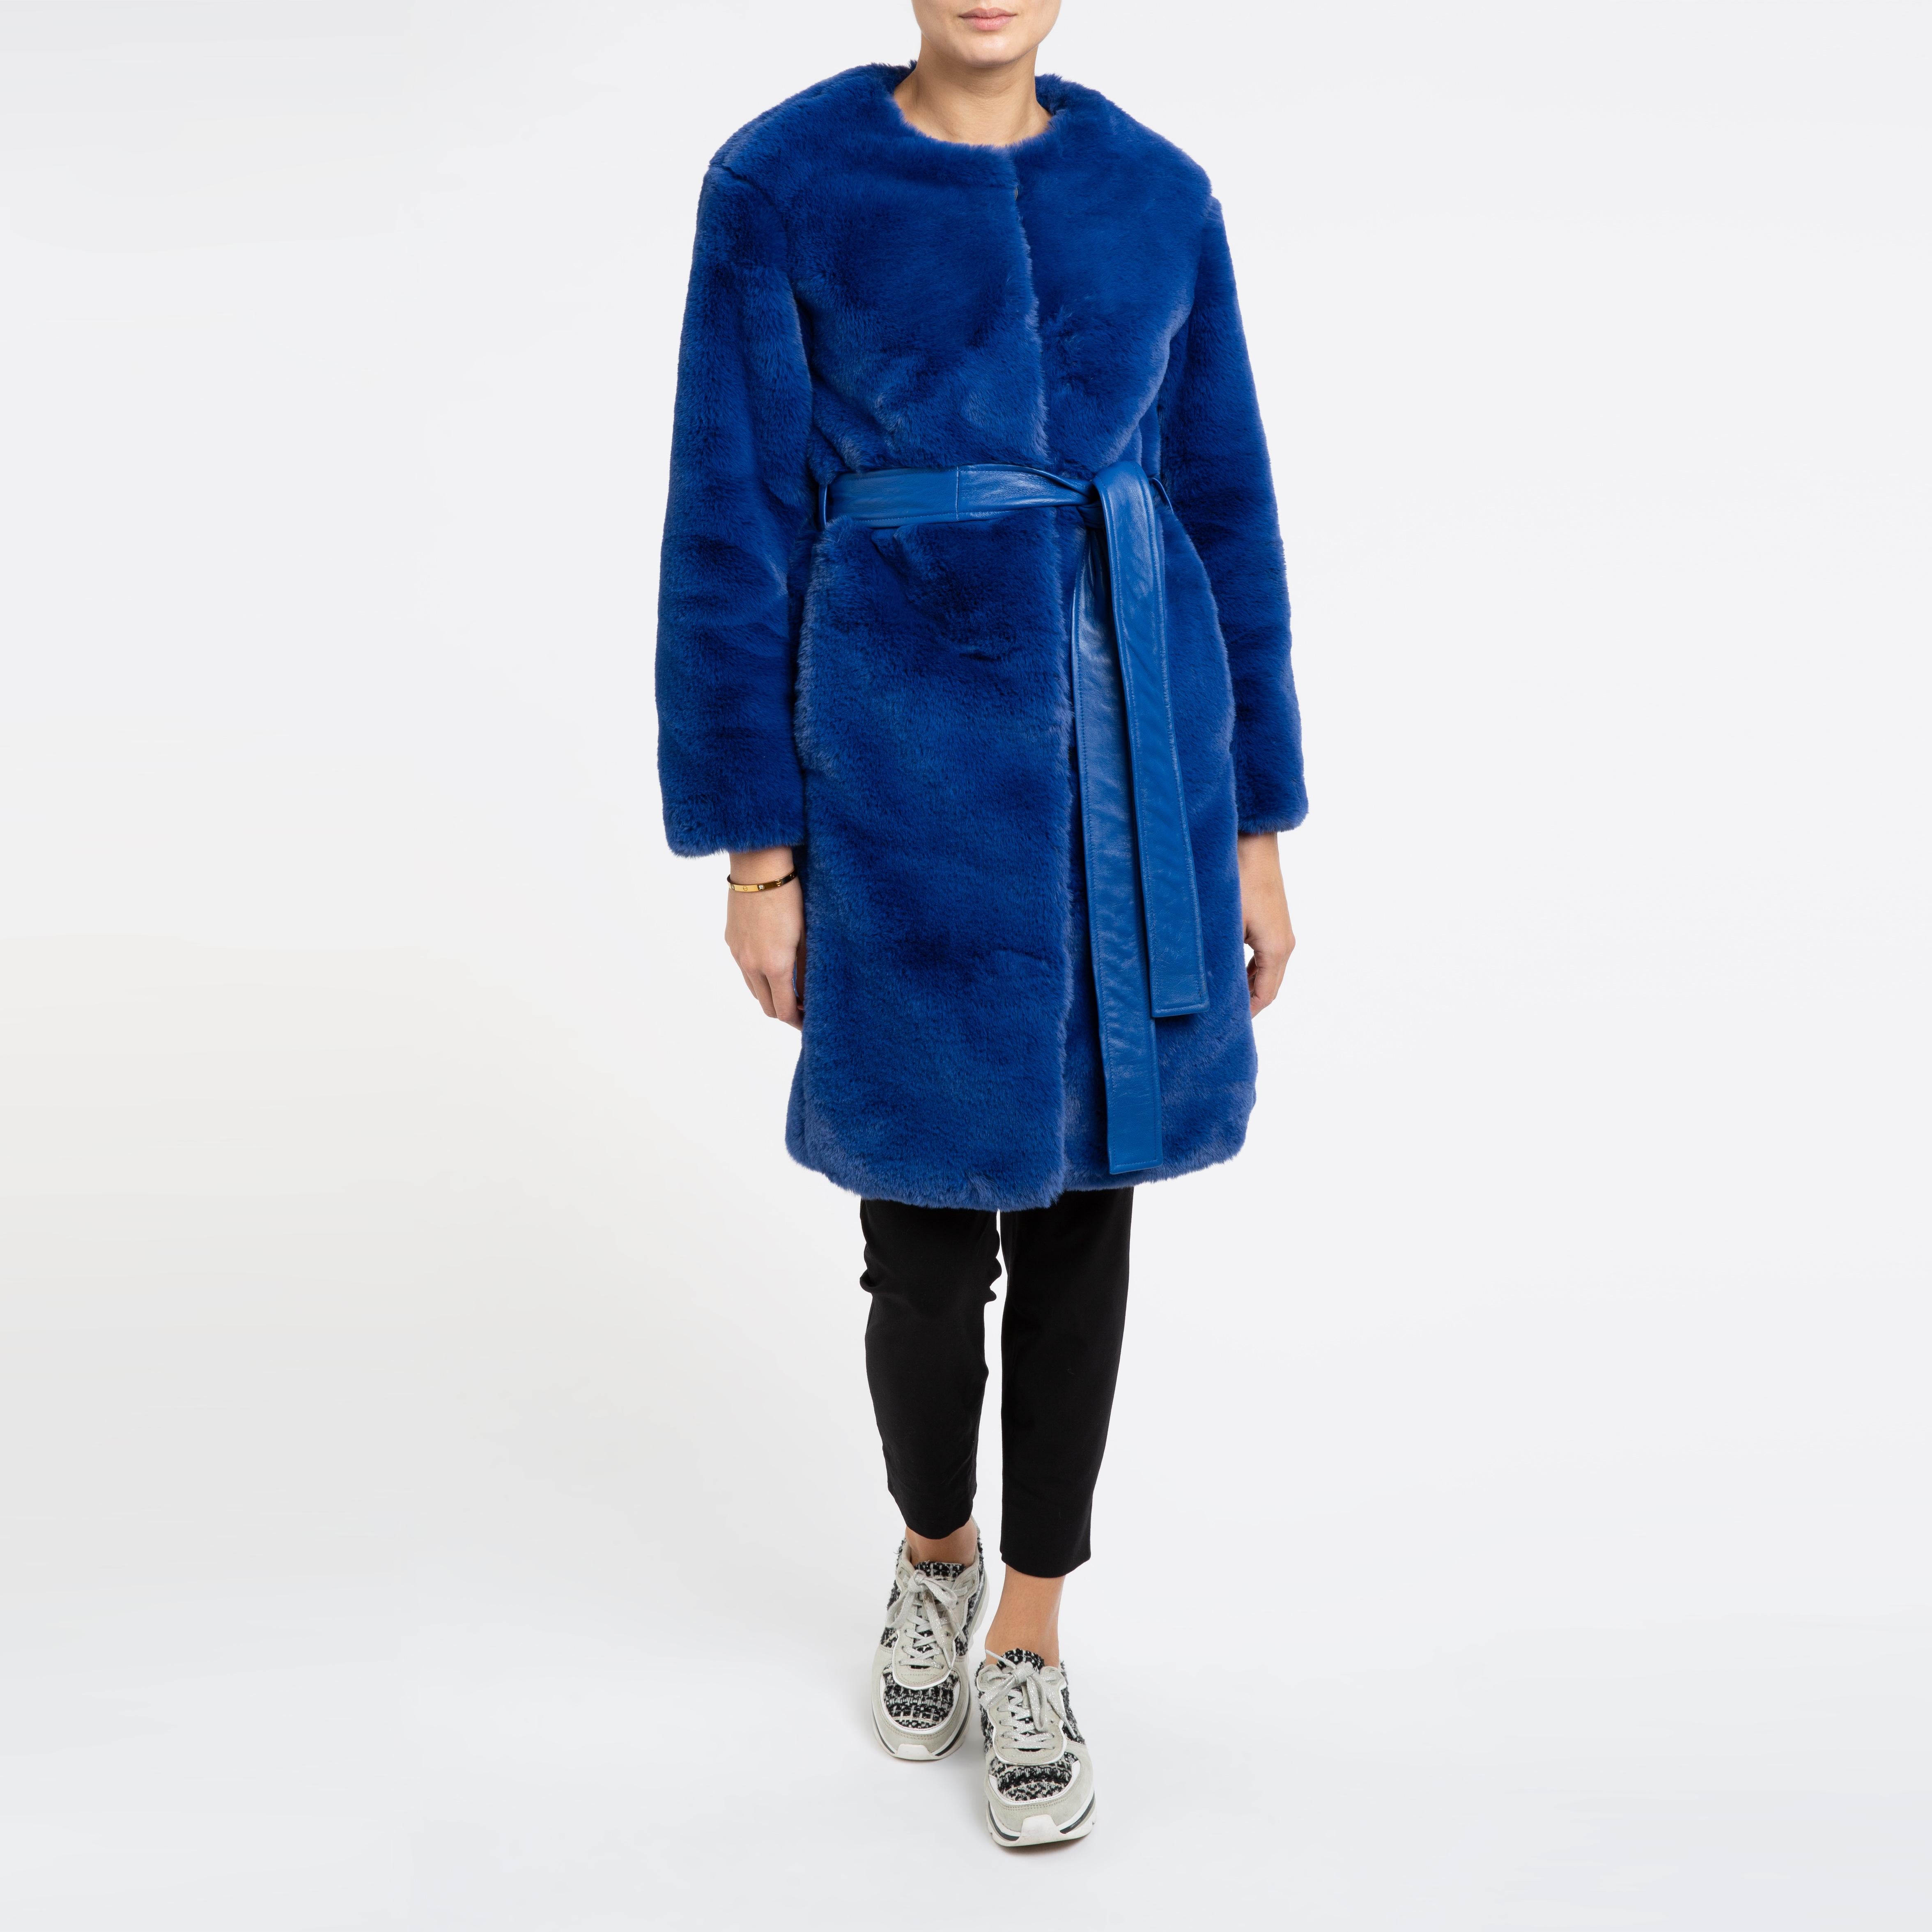 Verheyen London Serena  Collarless Faux Fur Coat in Blue - Size uk 10  For Sale 2